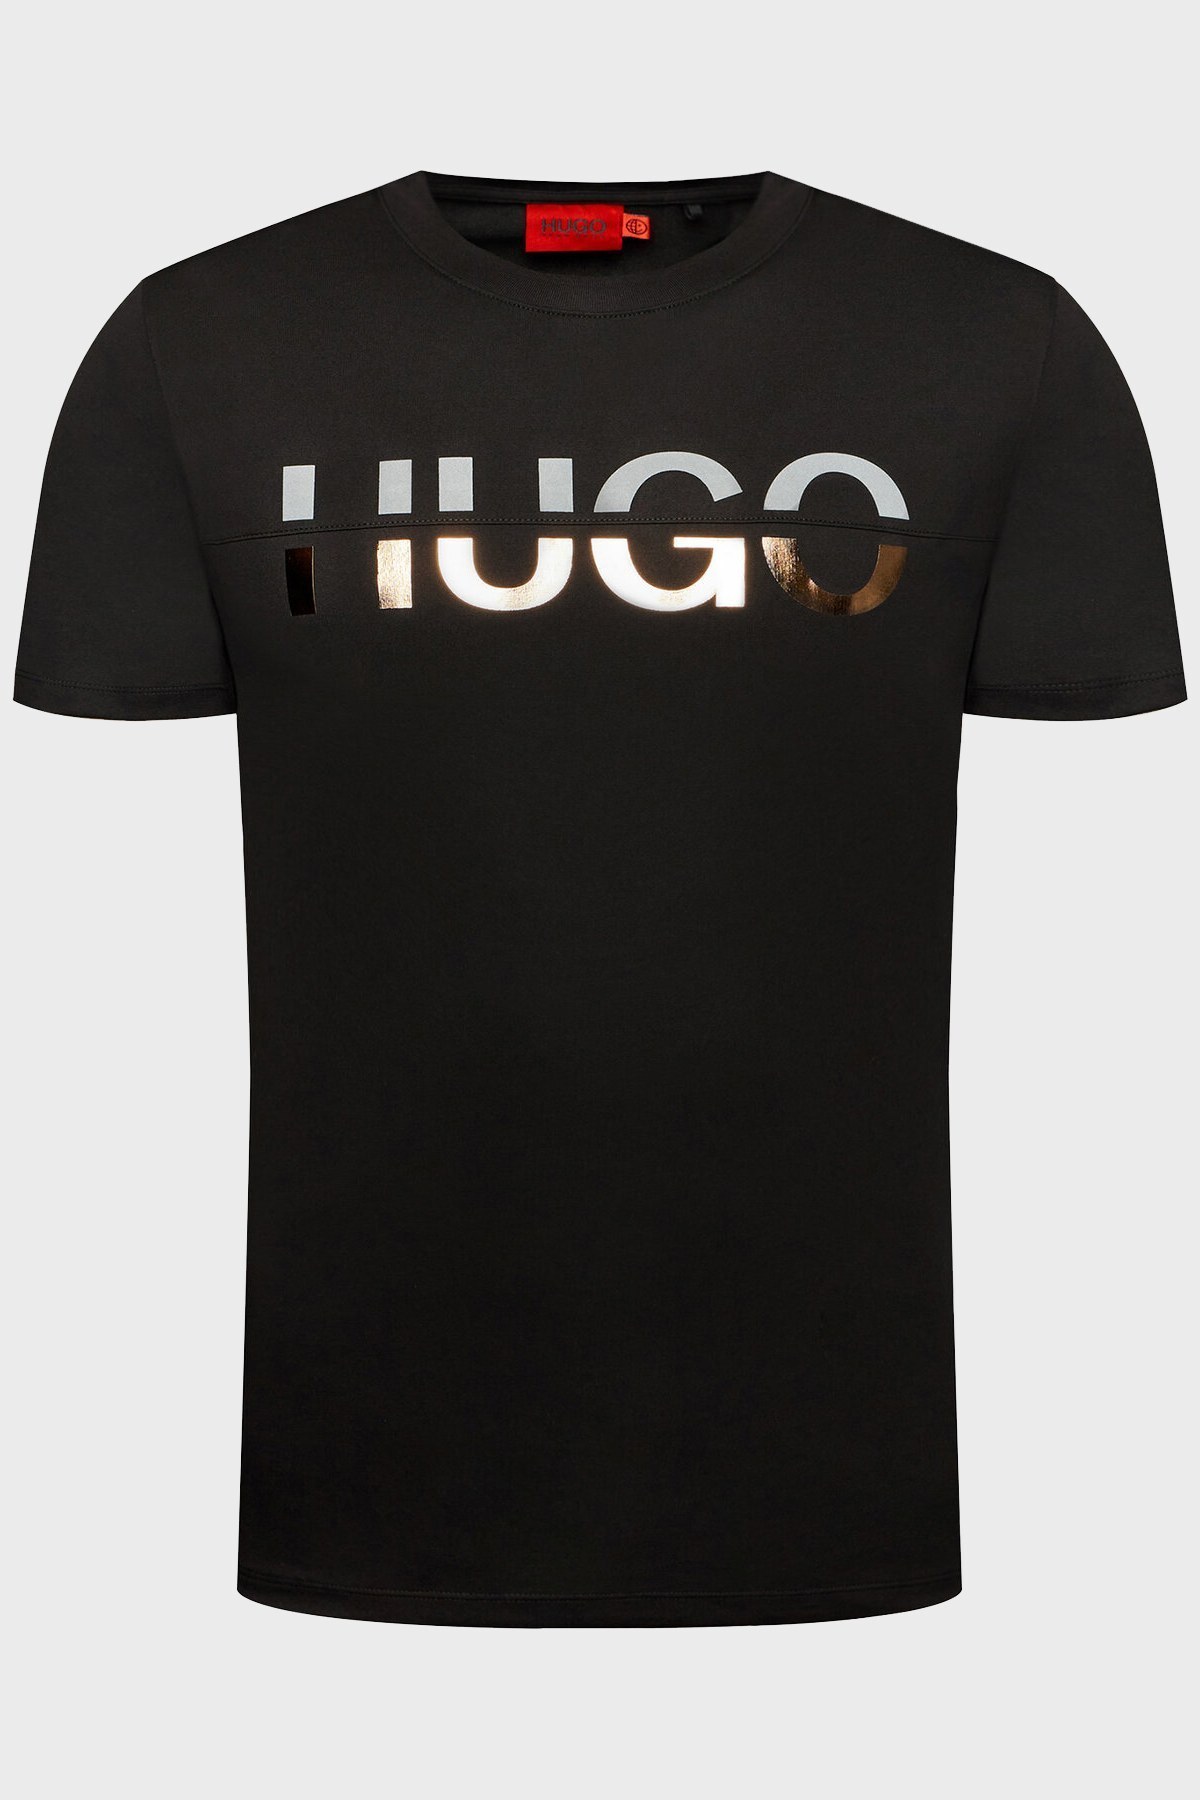 Hugo Baskılı Regular Fit Bisiklet Yaka % 100 Pamuk Erkek T Shirt 50466496 001 SİYAH